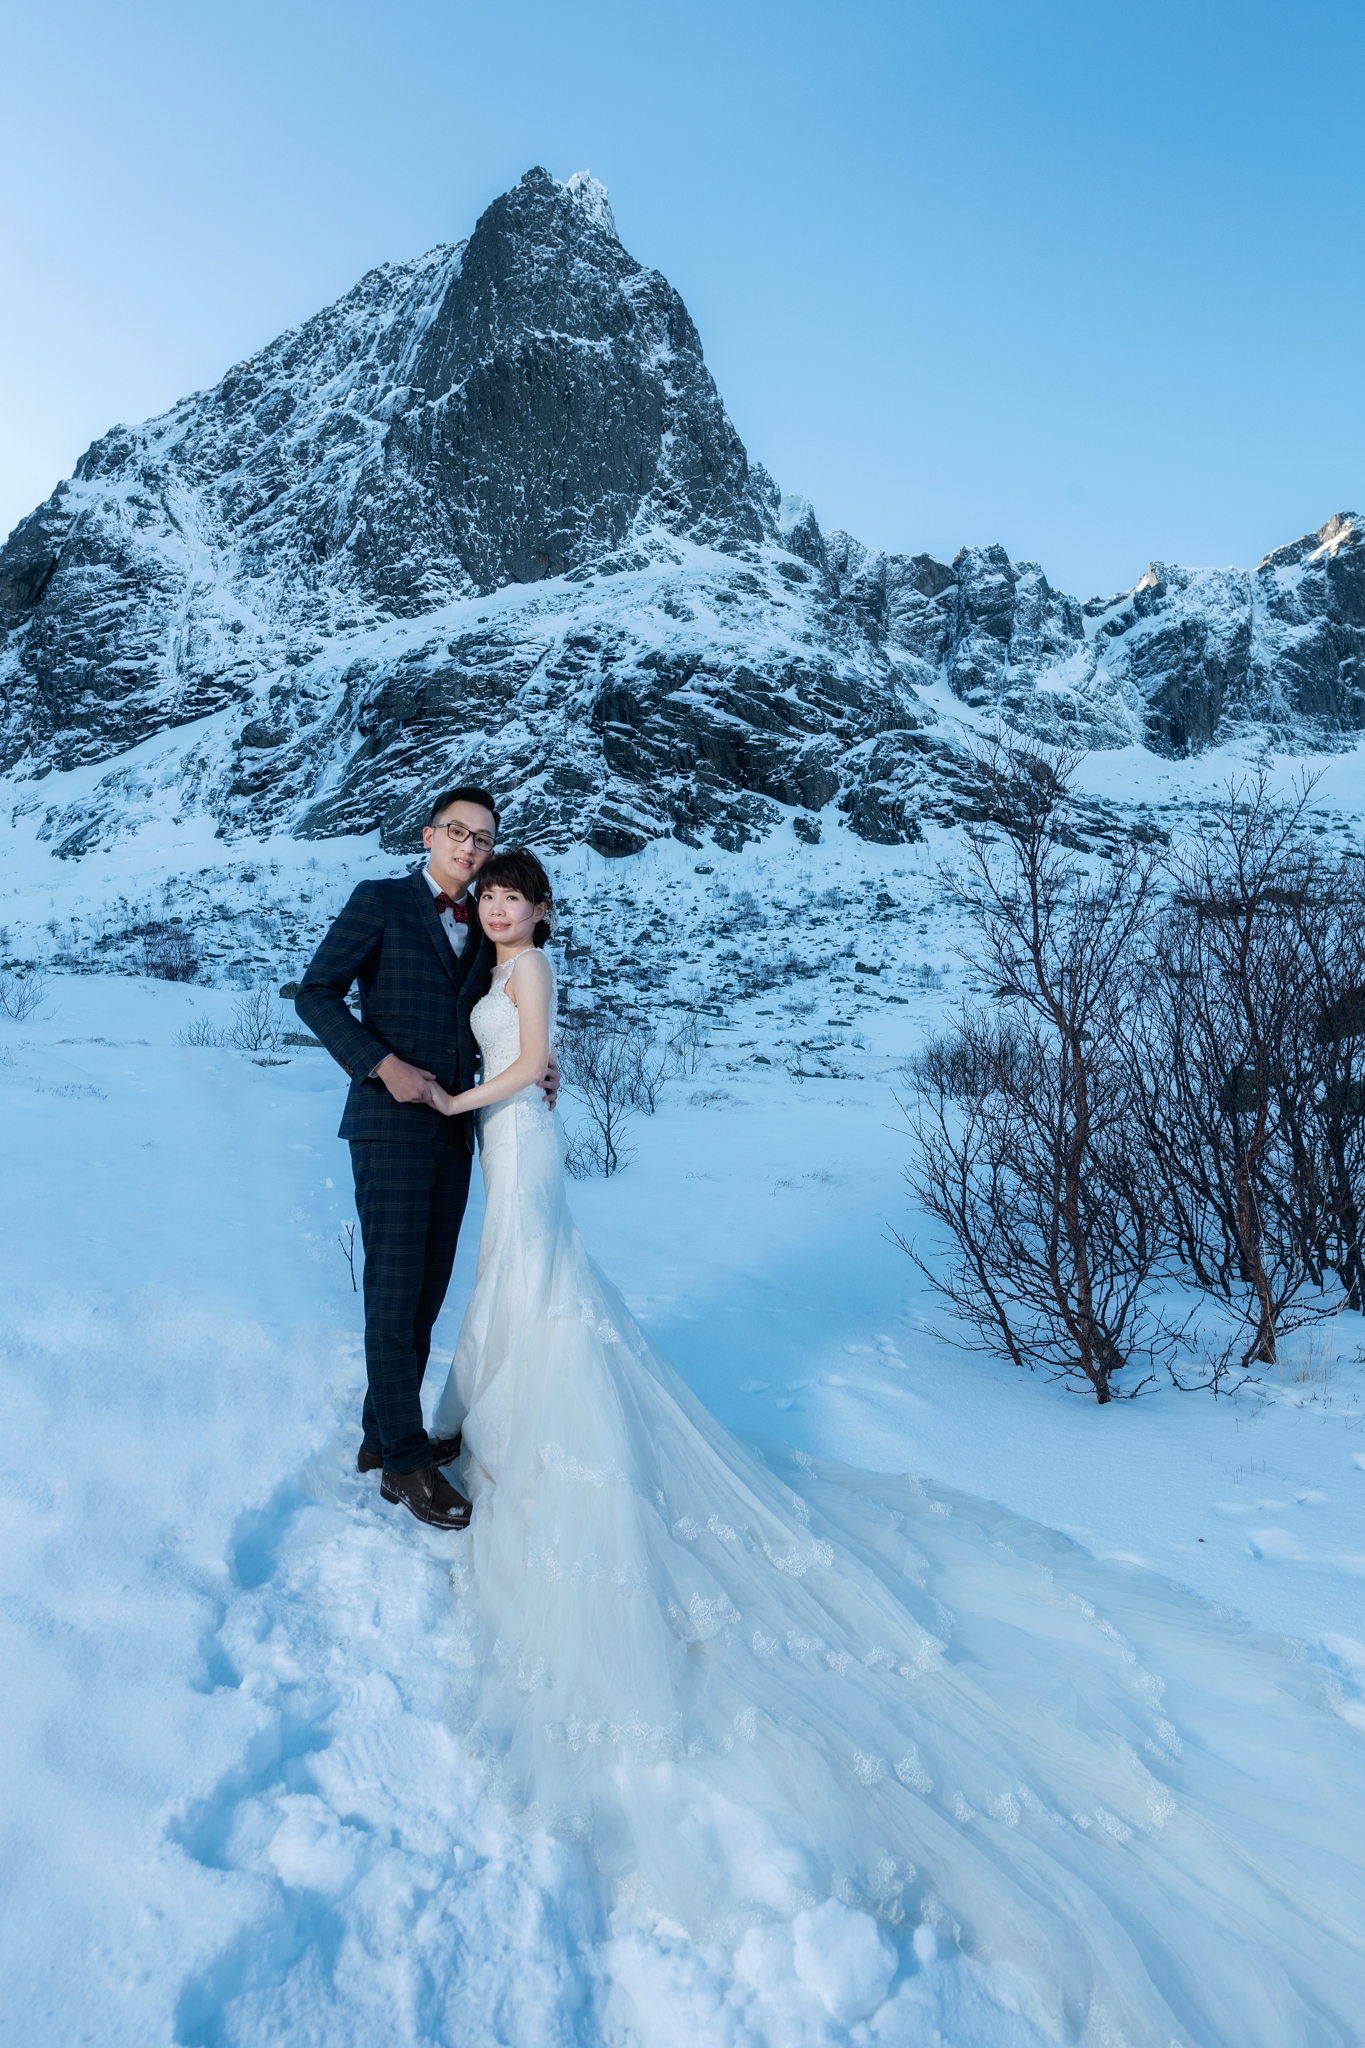 東法, 藝術婚紗, Donfer, Donfer Photography, EASTERN WEDDING, 海外婚紗, 挪威婚紗, Norway Pre-Wedding, Lofoten, Tromso